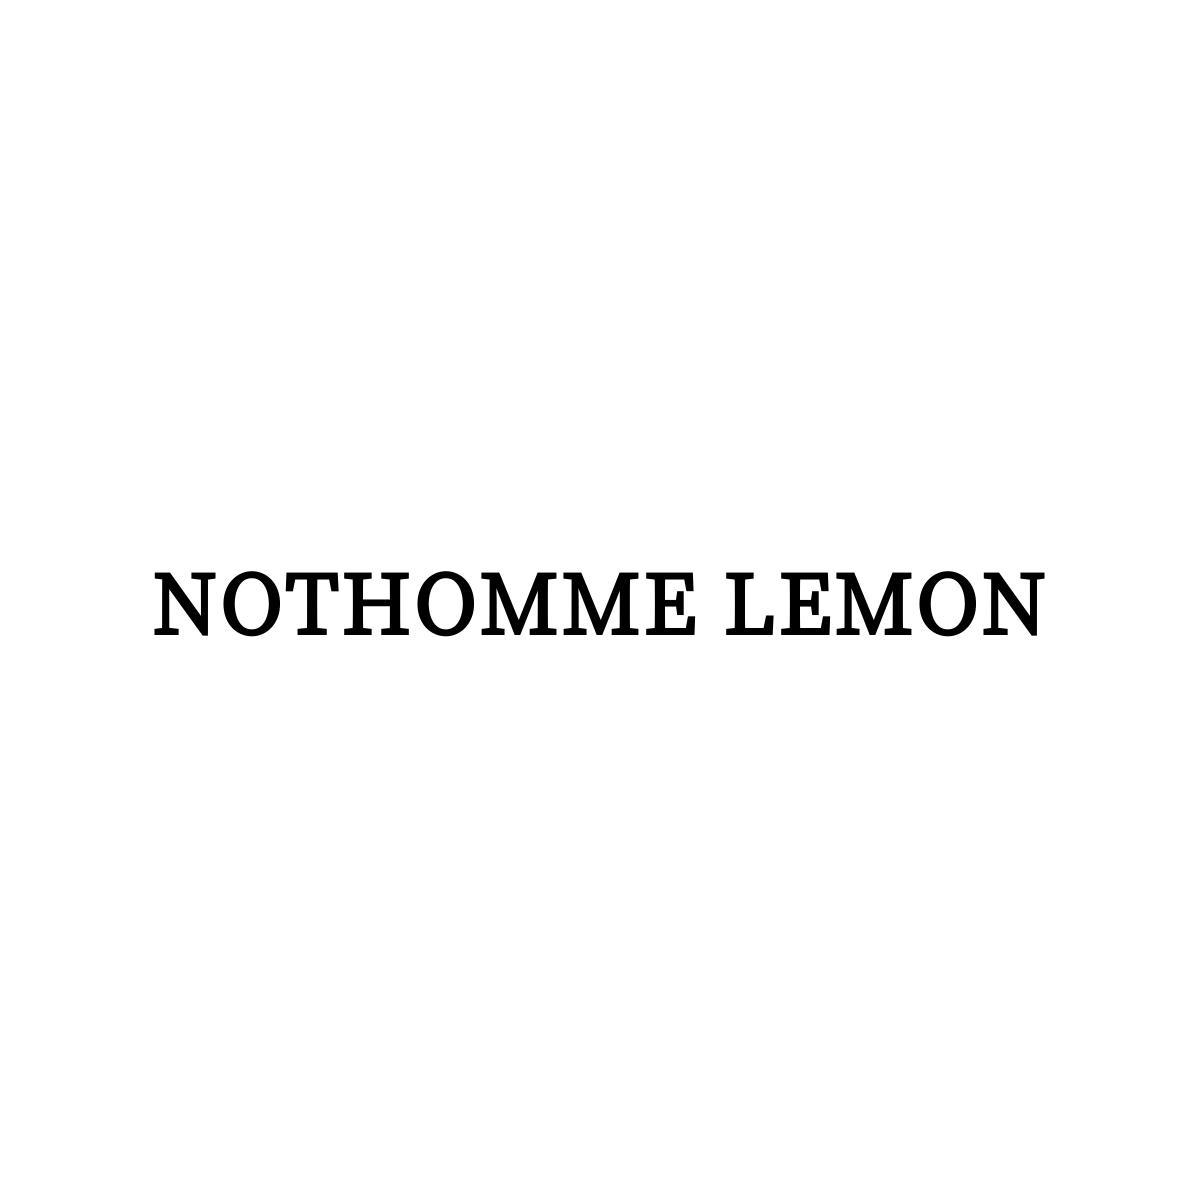 NOTHOMME LEMON